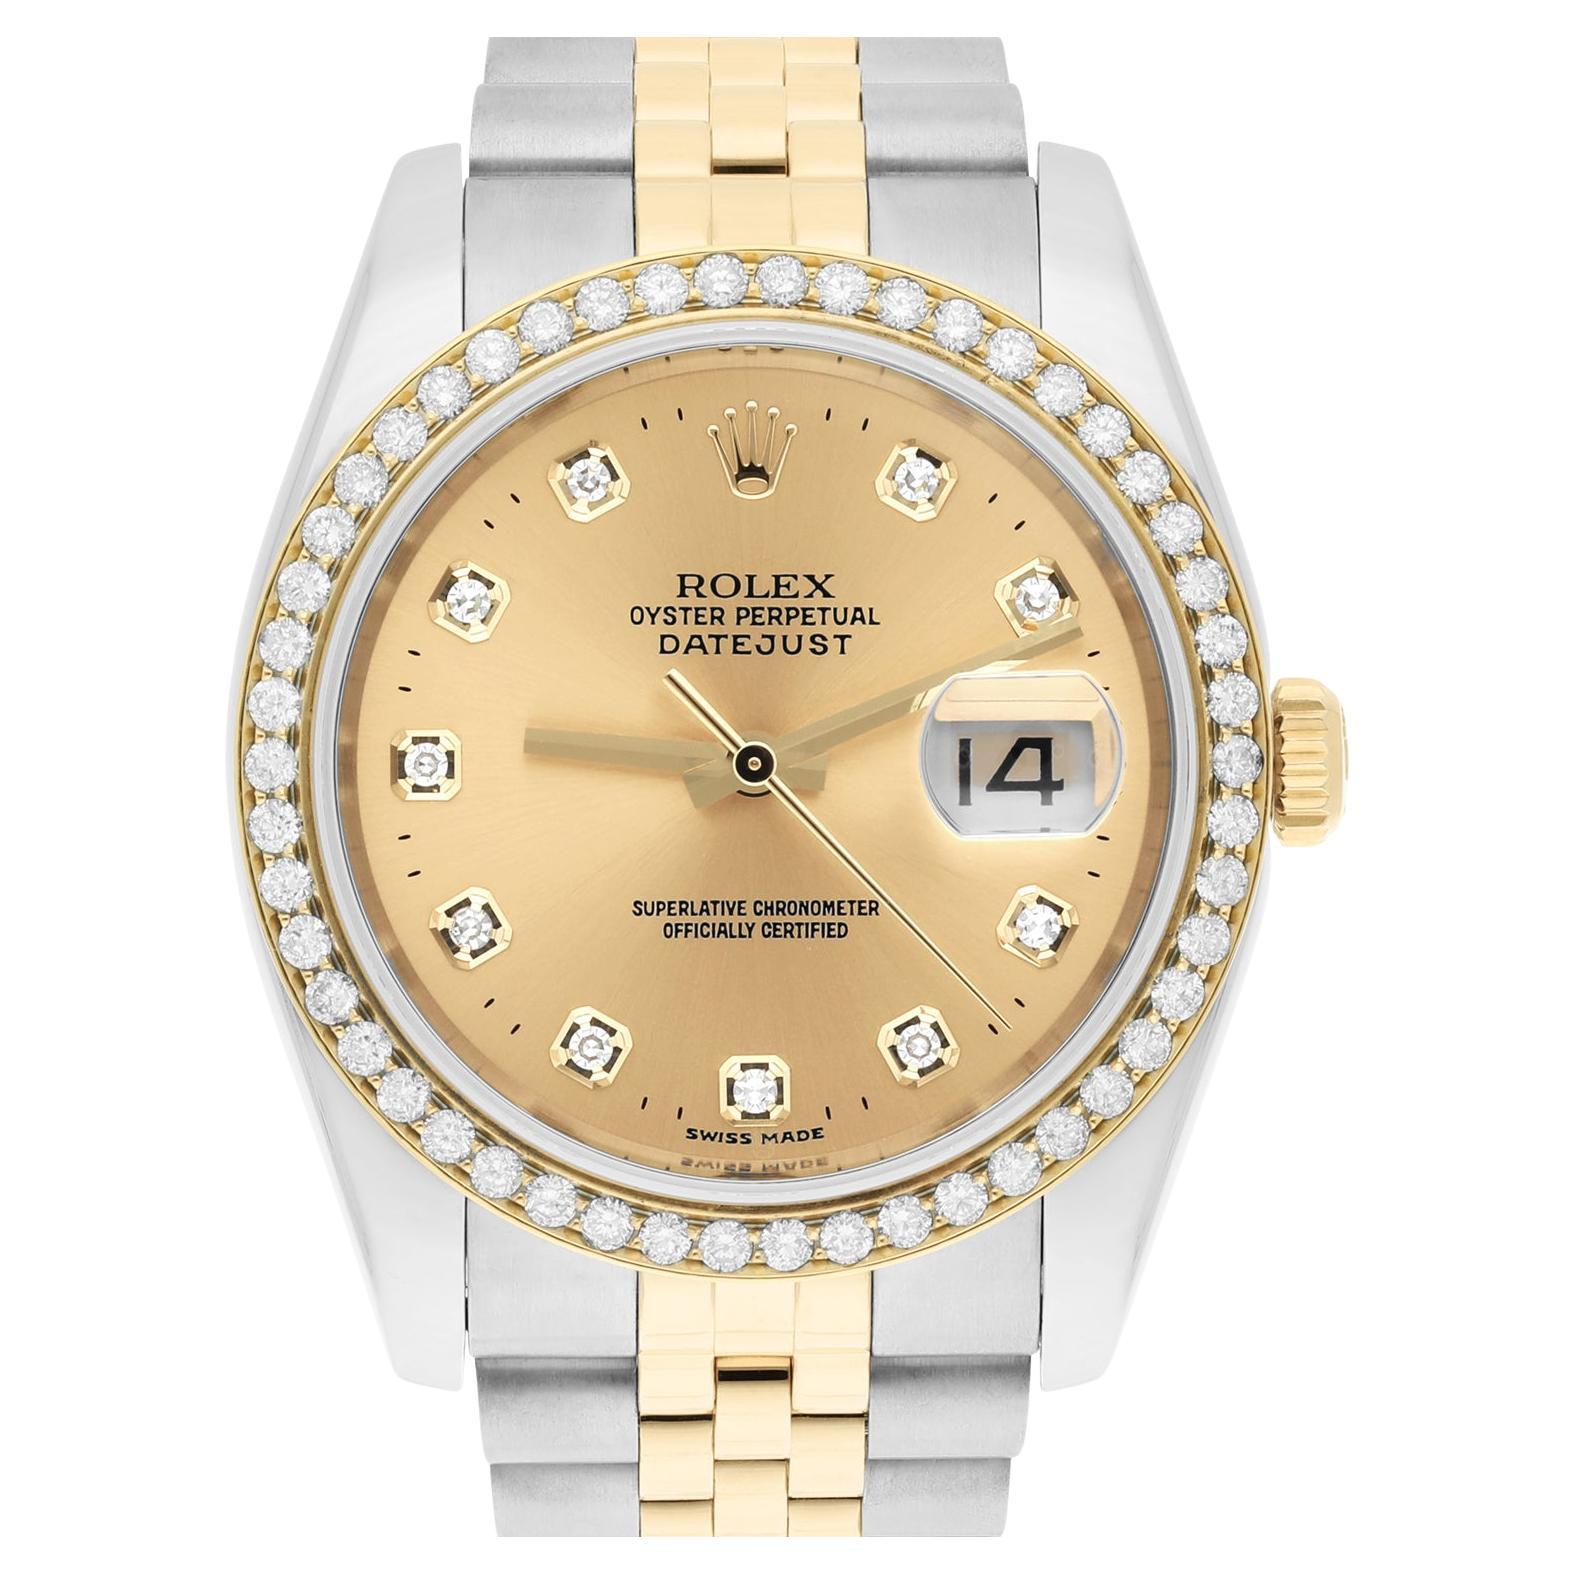 Reloj Rolex Datejust 36 Oro y Acero 116233 Reloj Jubilee Esfera Champán en venta